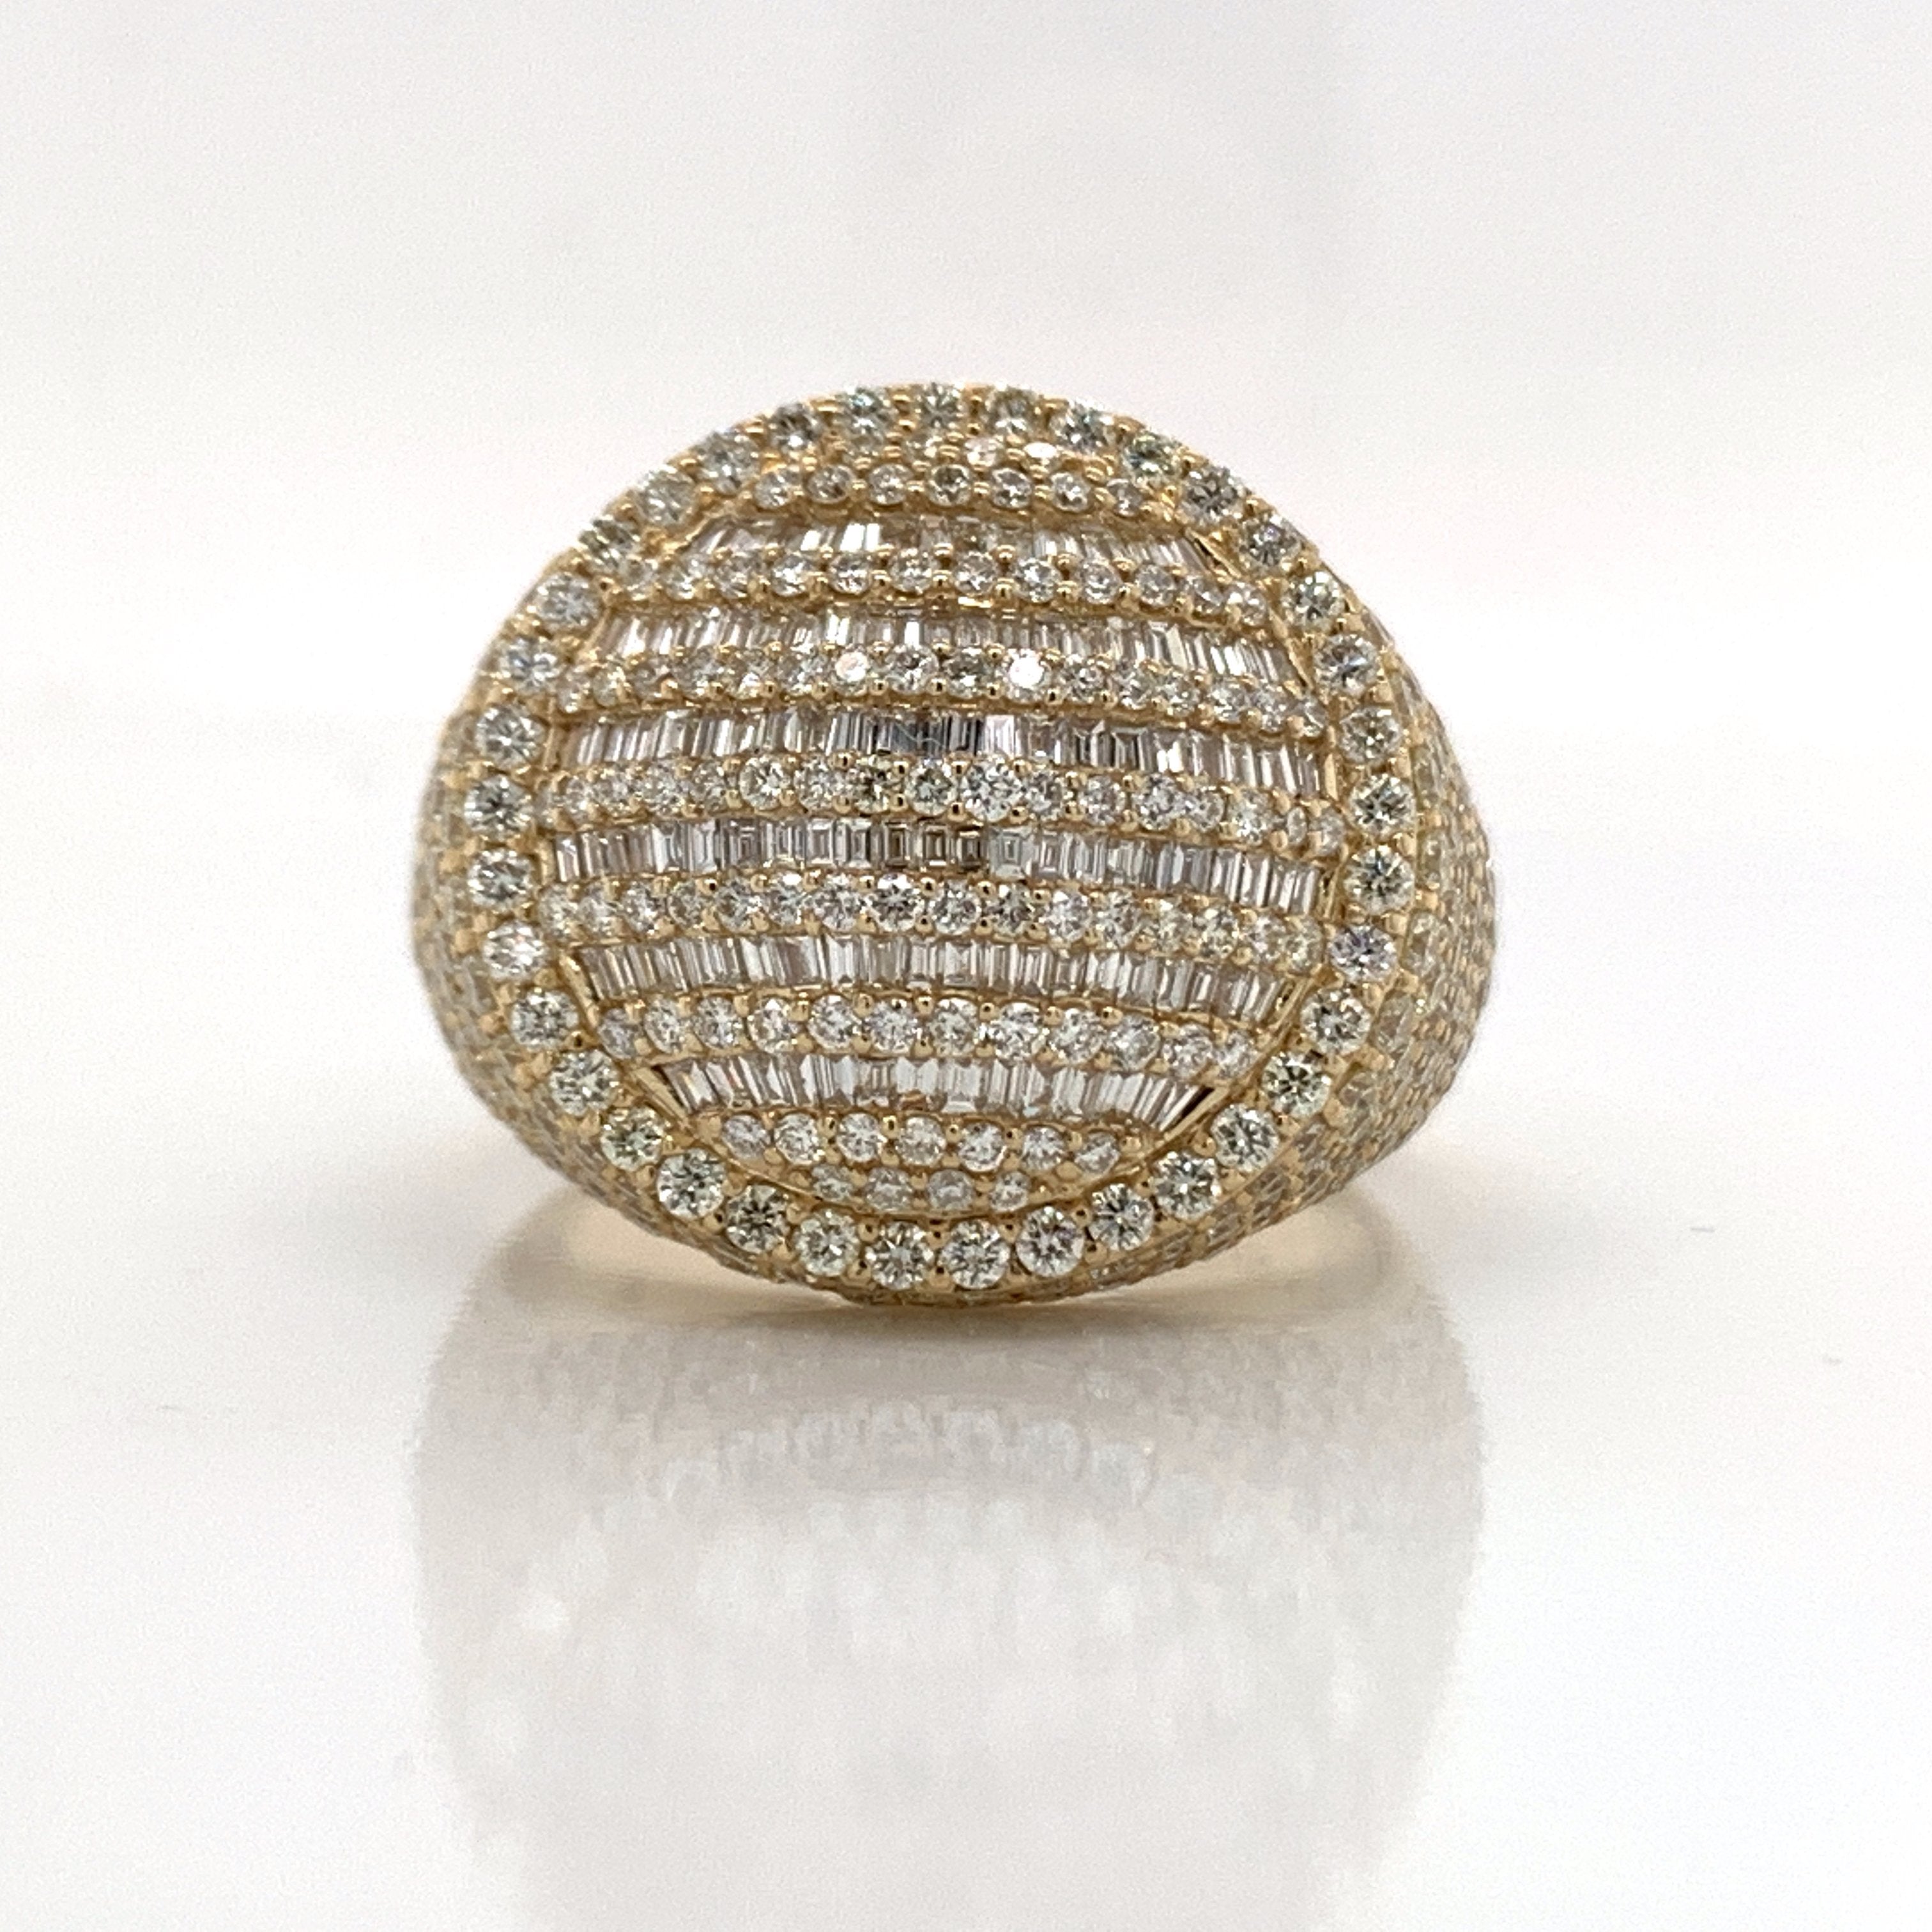 4.50 CT. Diamond Ring in 10K Gold - White Carat Diamonds 